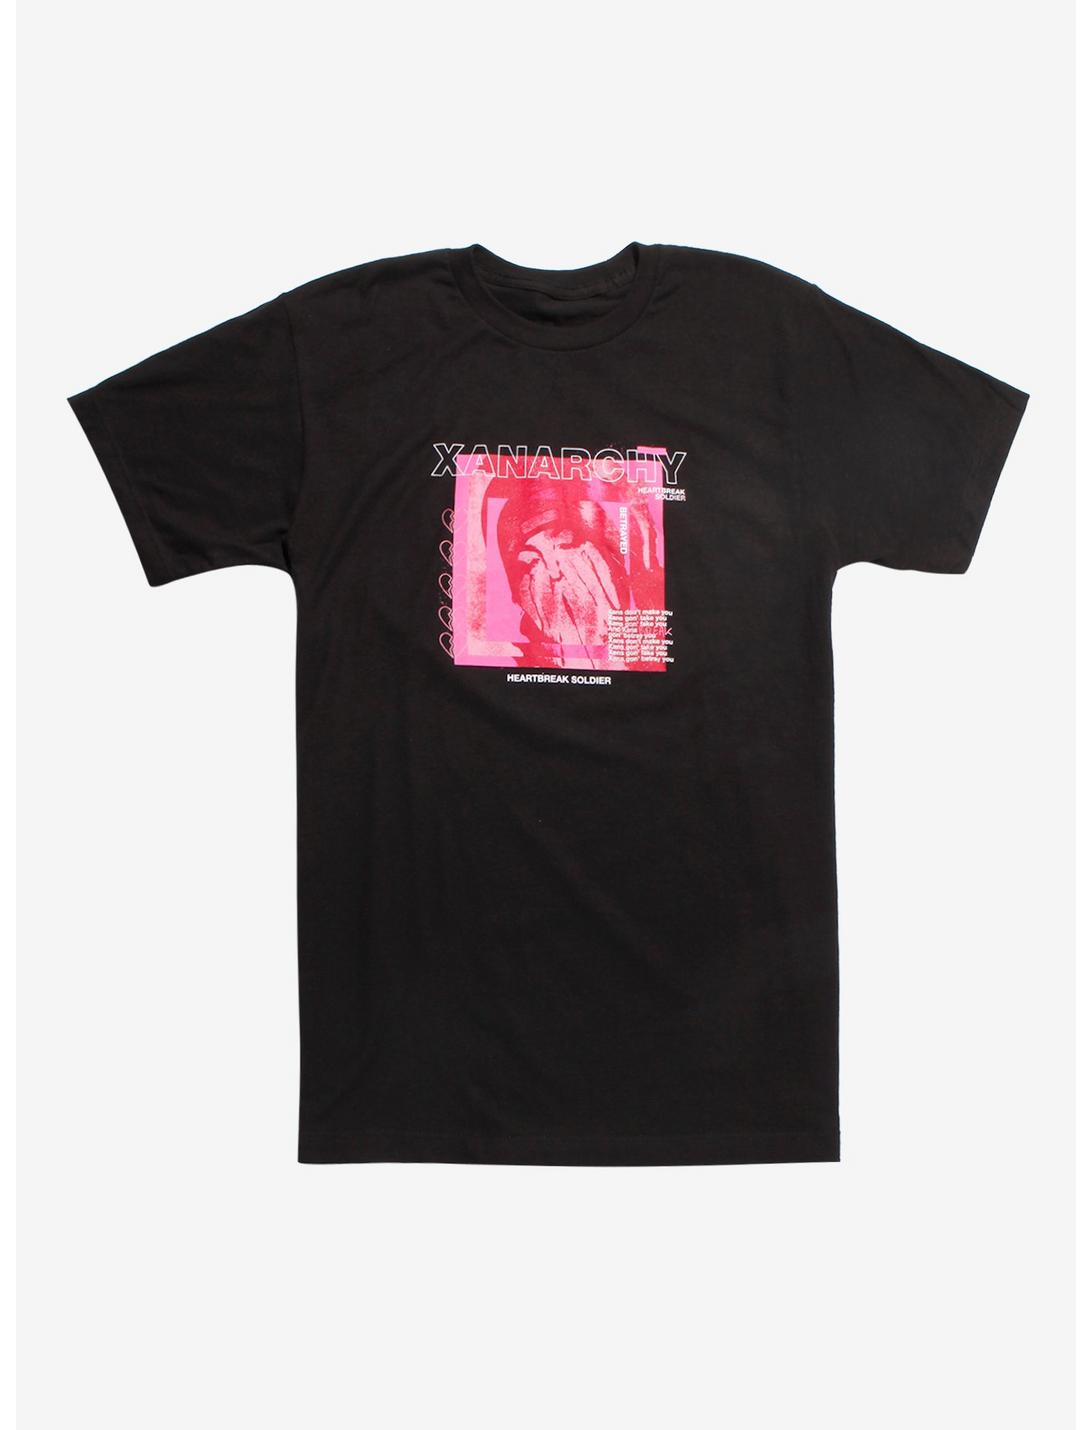 Lil Xan Xanarchy T-Shirt, BLACK, hi-res